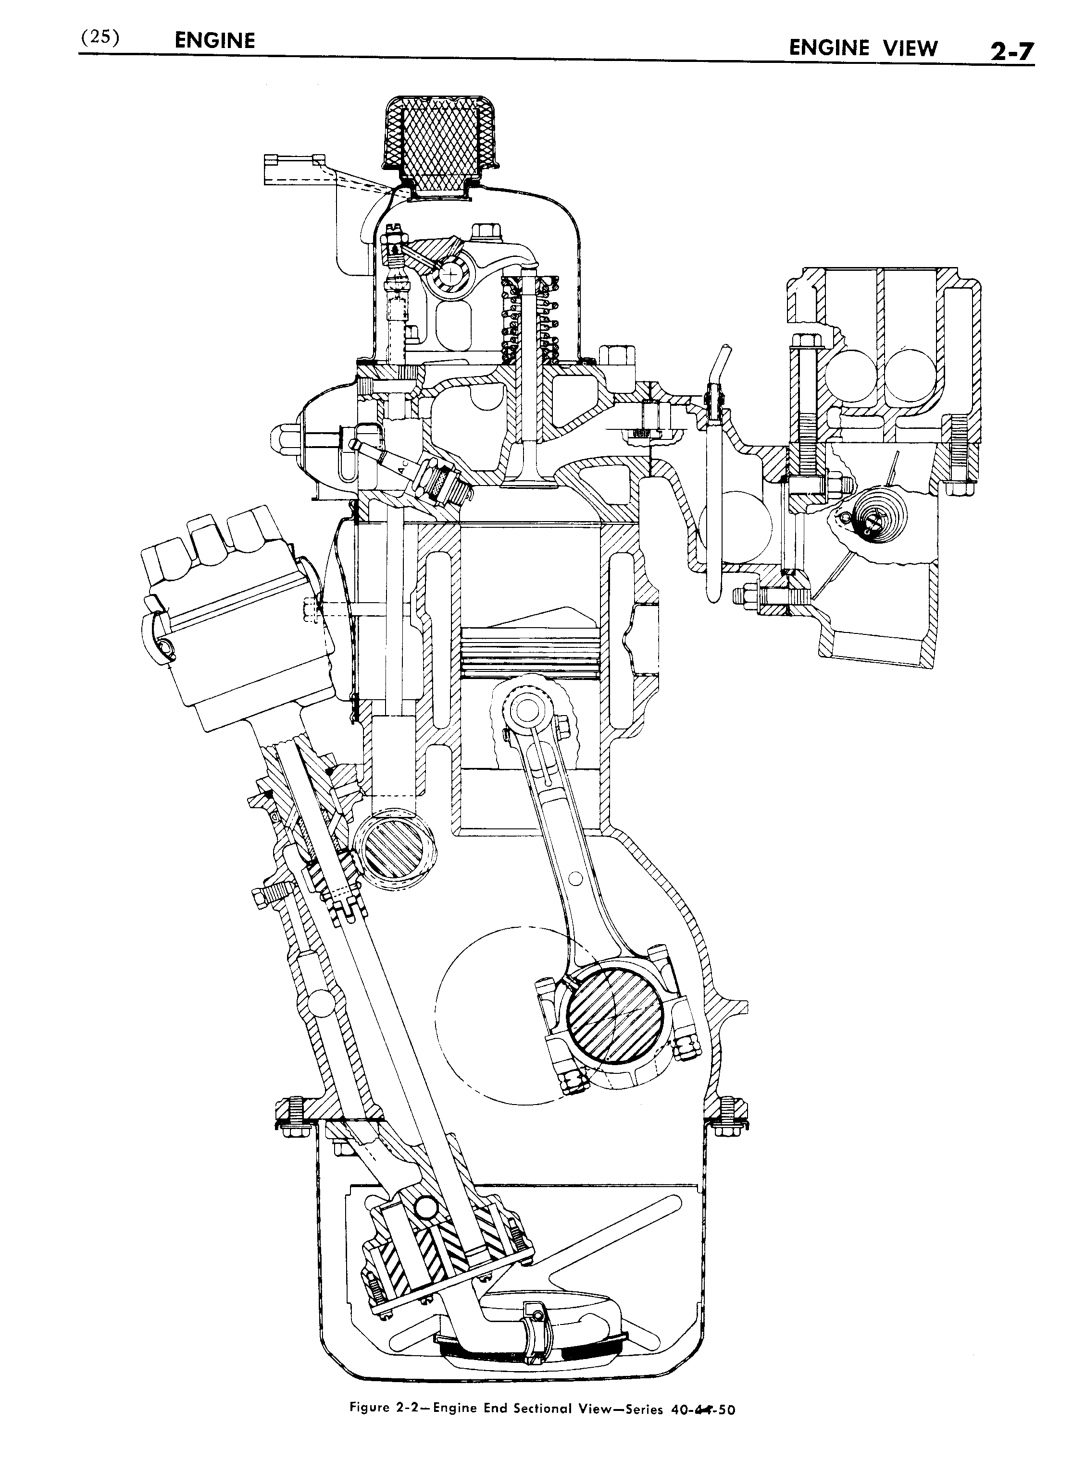 n_03 1951 Buick Shop Manual - Engine-007-007.jpg